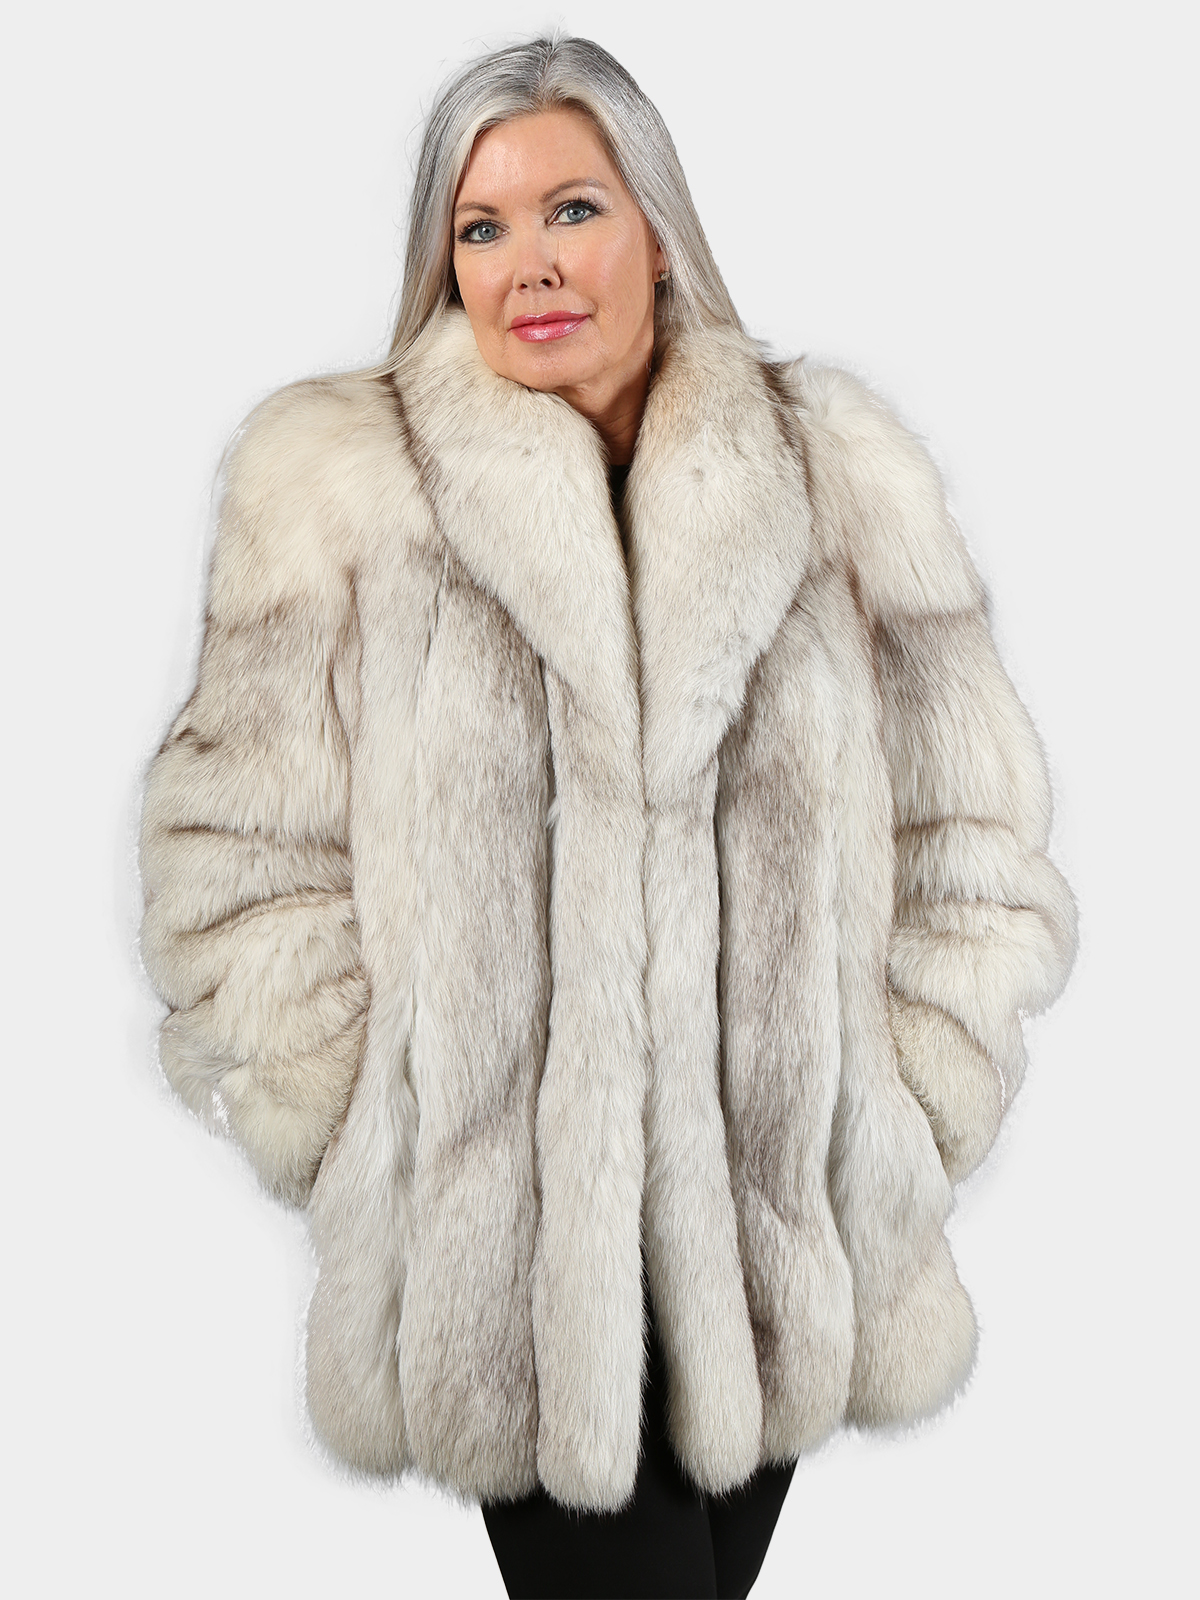 Navy Blue Mink Fur Jacket With Hood - 100% Real Fur - Haute Acorn